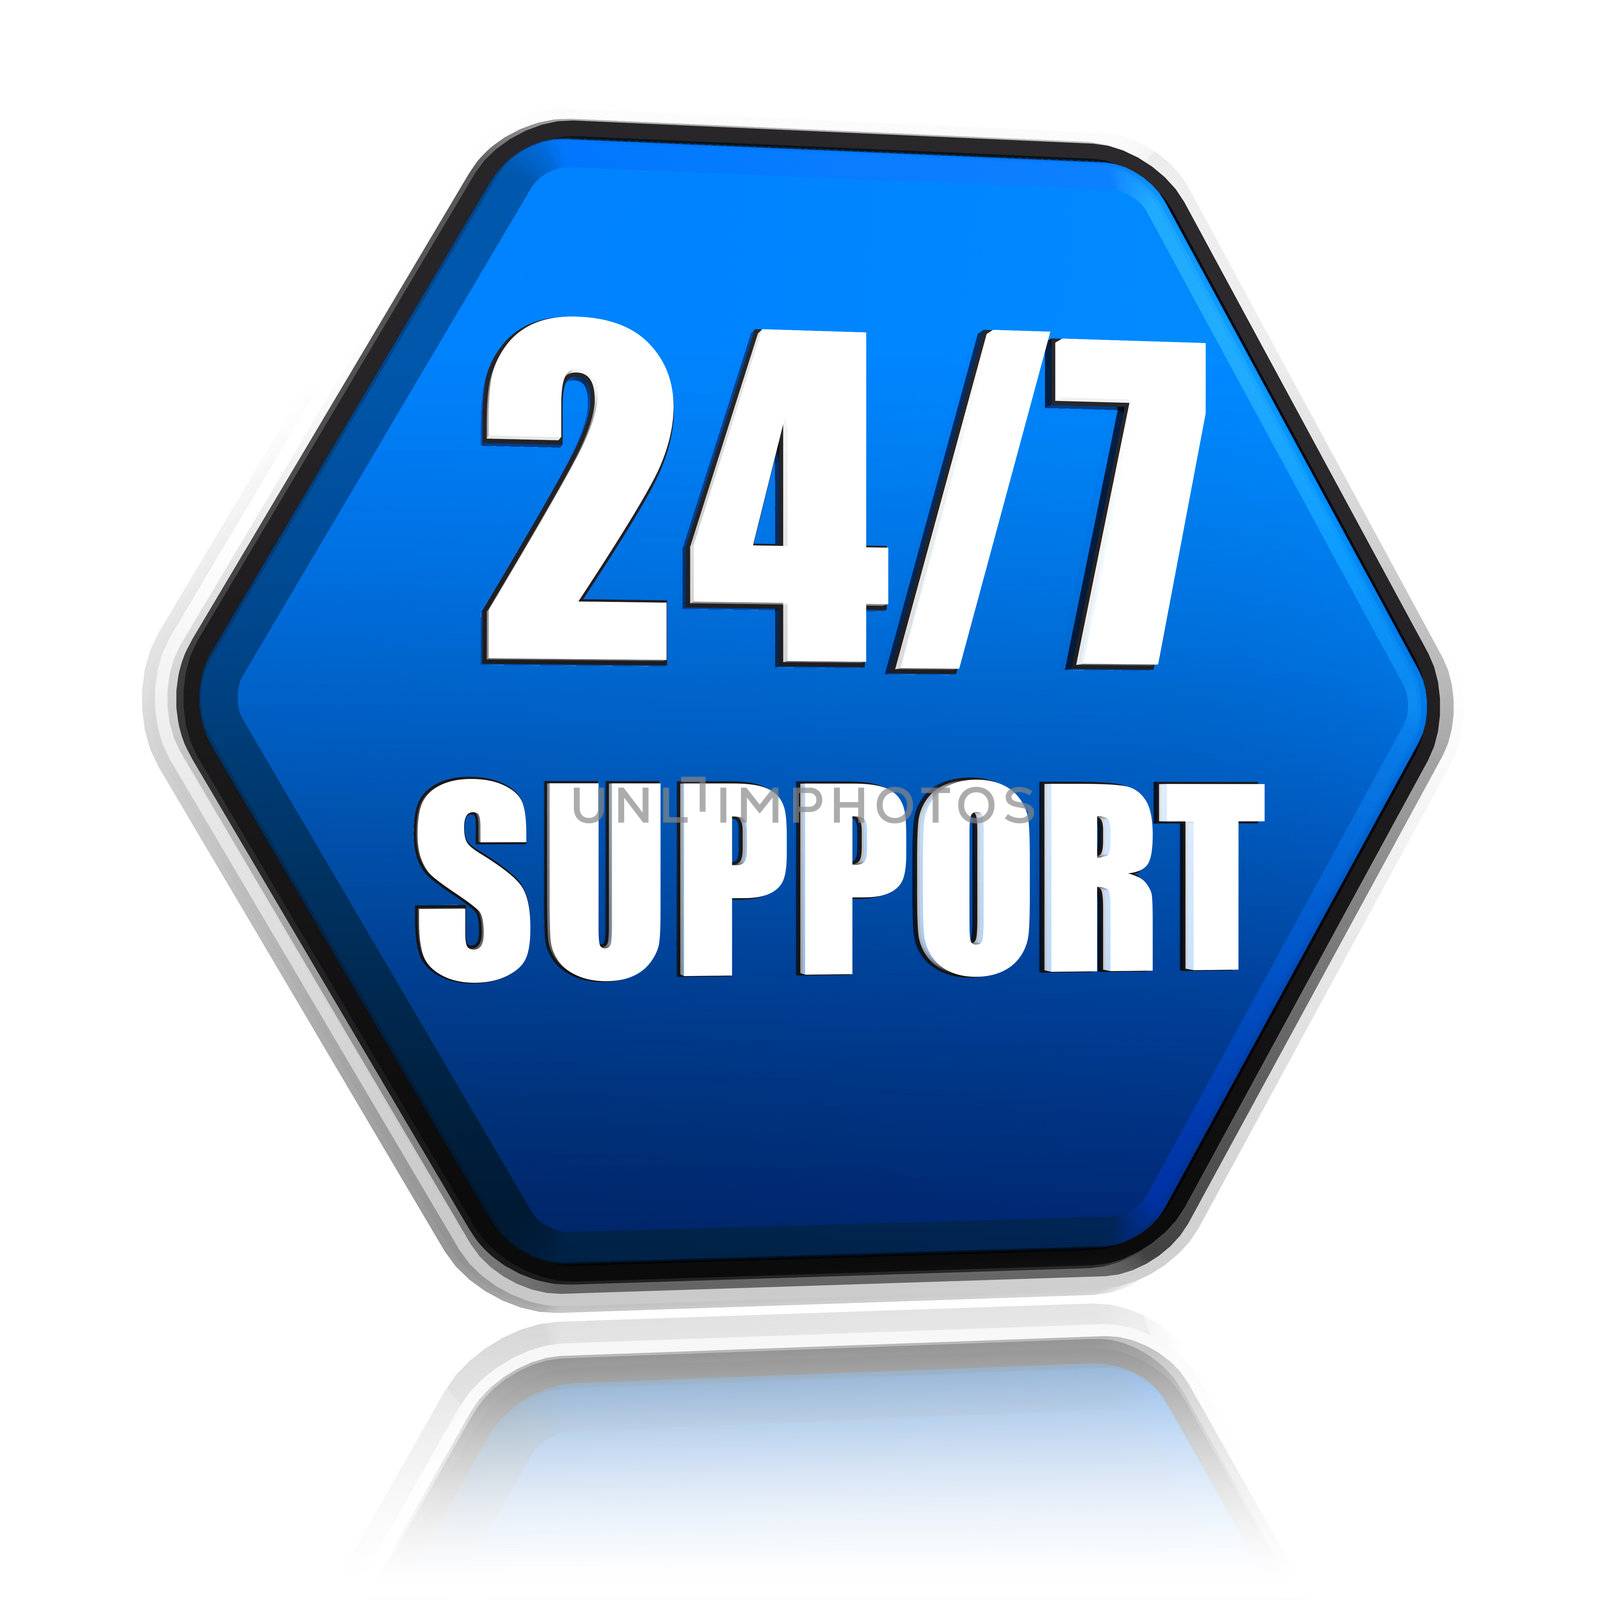 24 7 support hexagon button by marinini